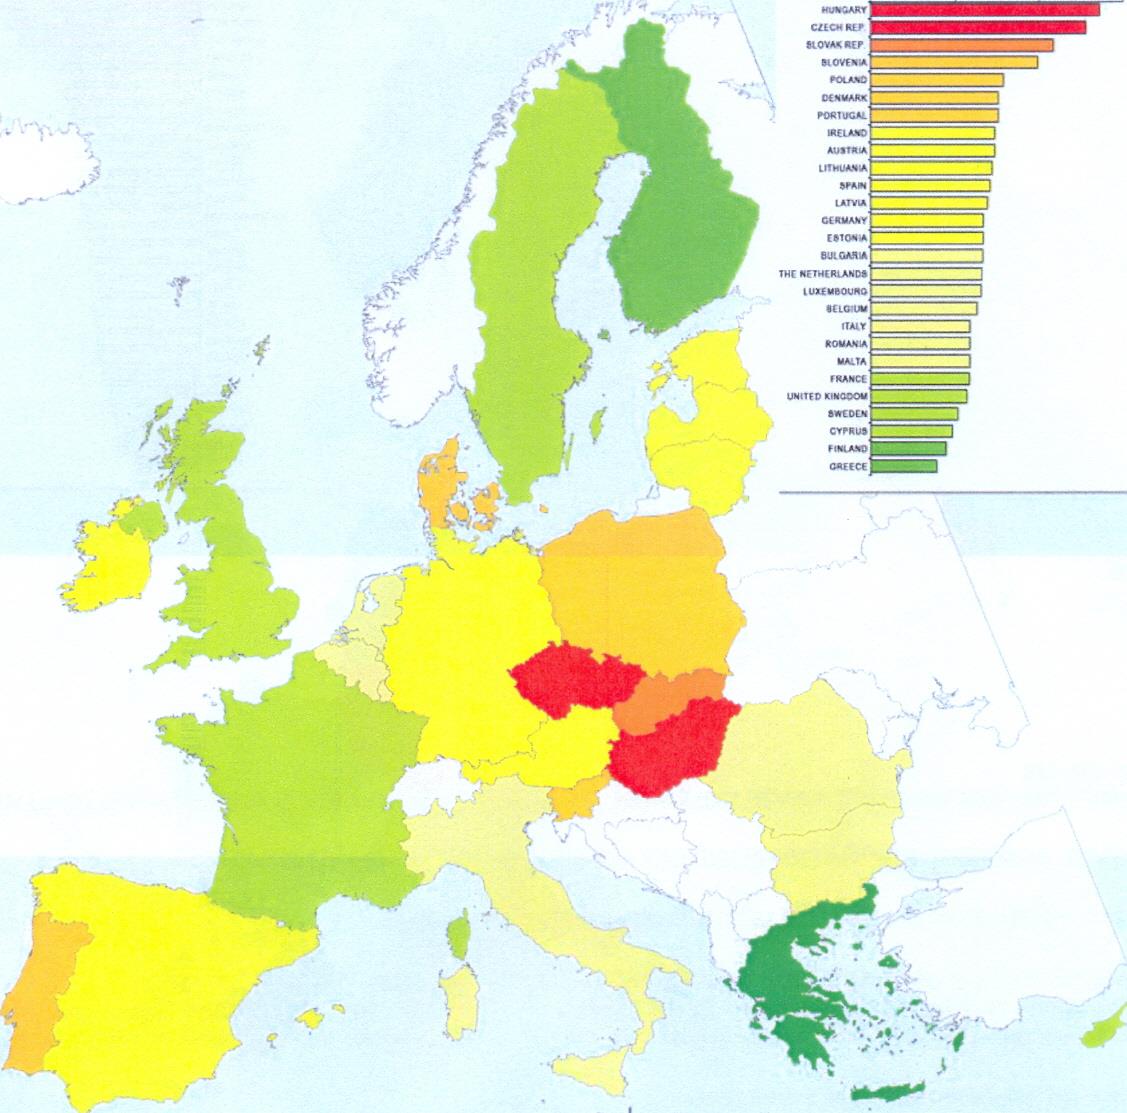 Colorectal cancer mortality in men in the EU Member